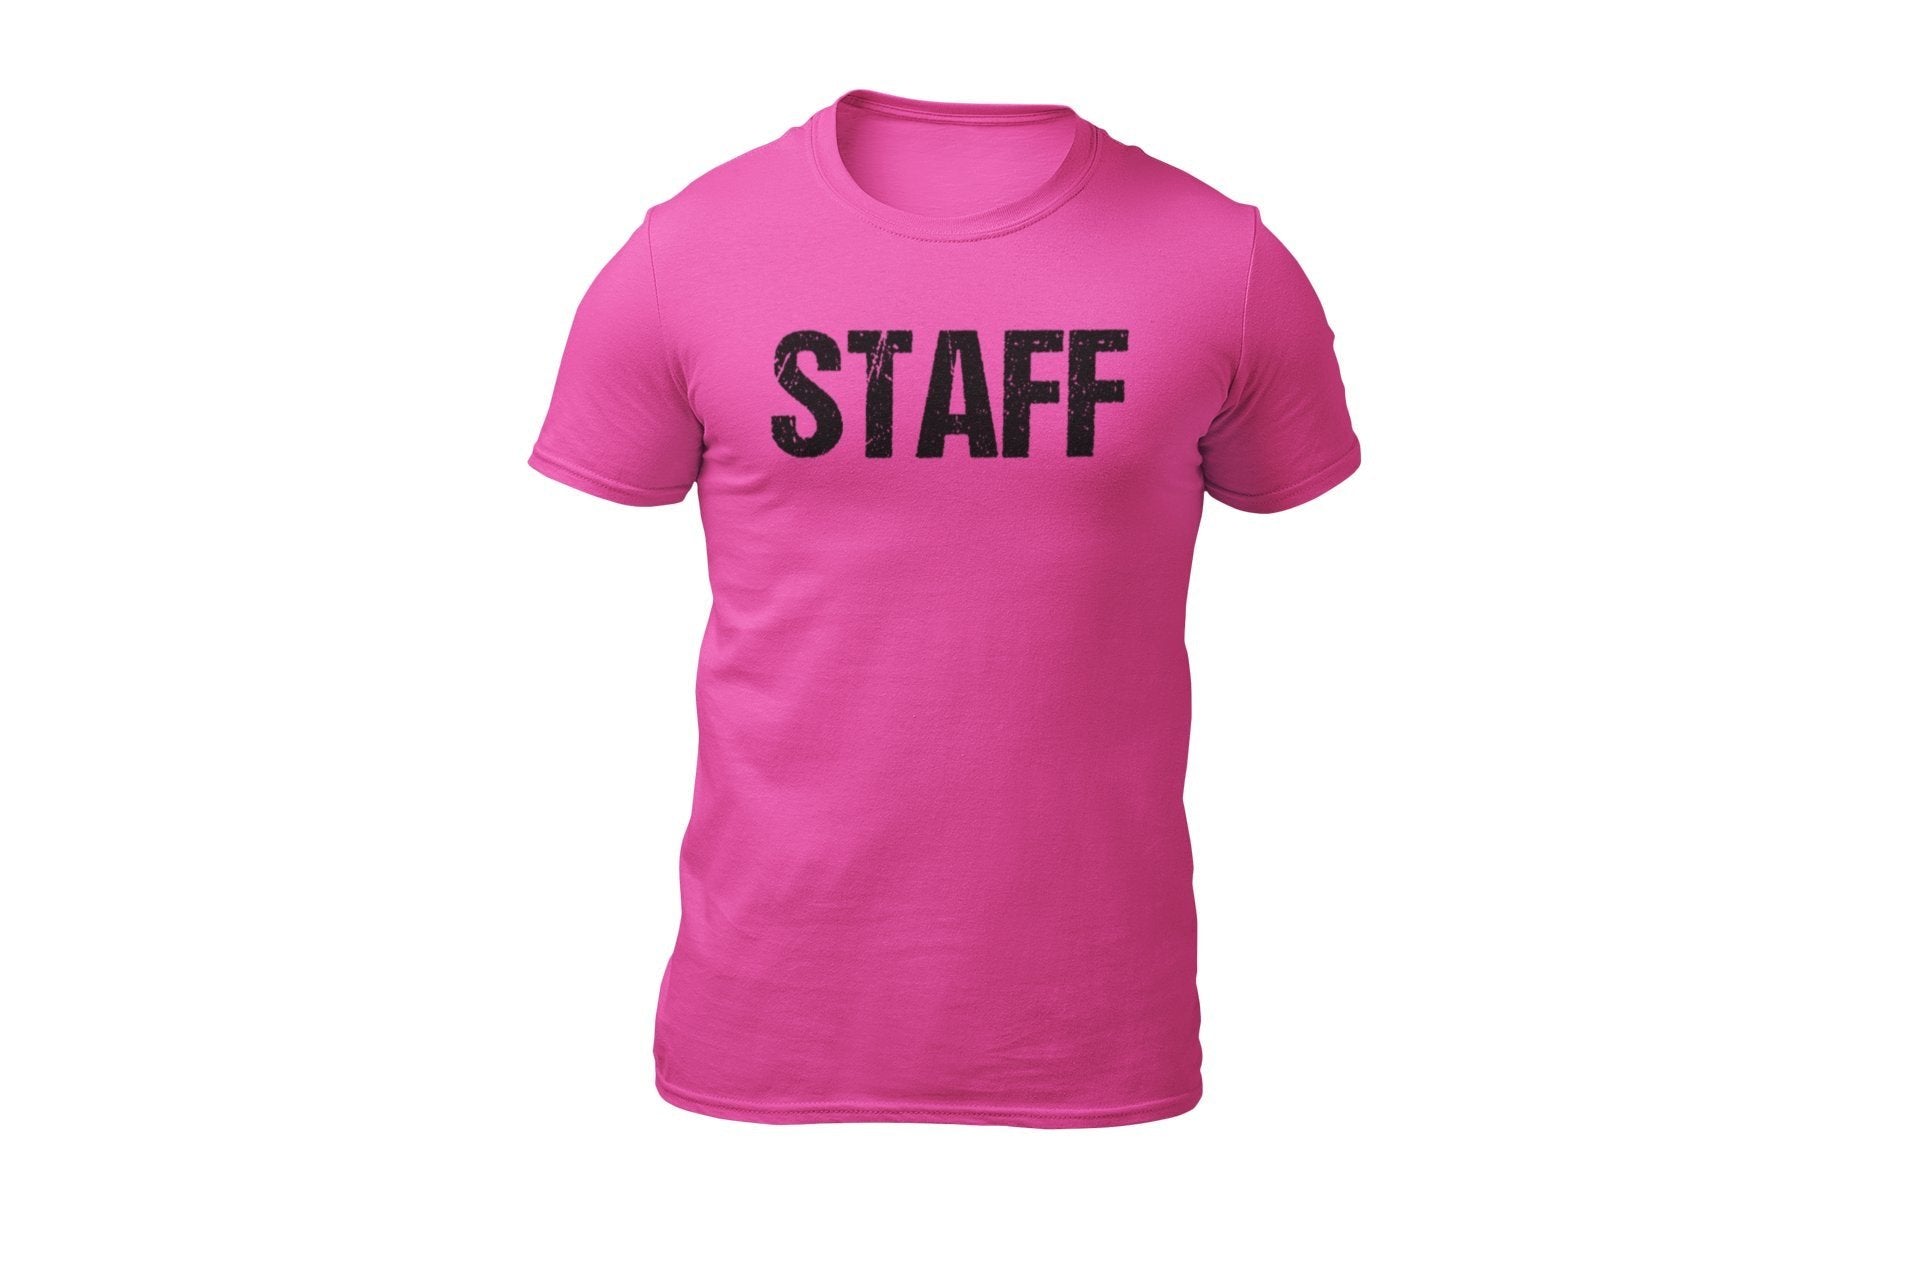 Staff Men's T-Shirt Front & Back Print (Distressed Design, Neon Pink & Black)